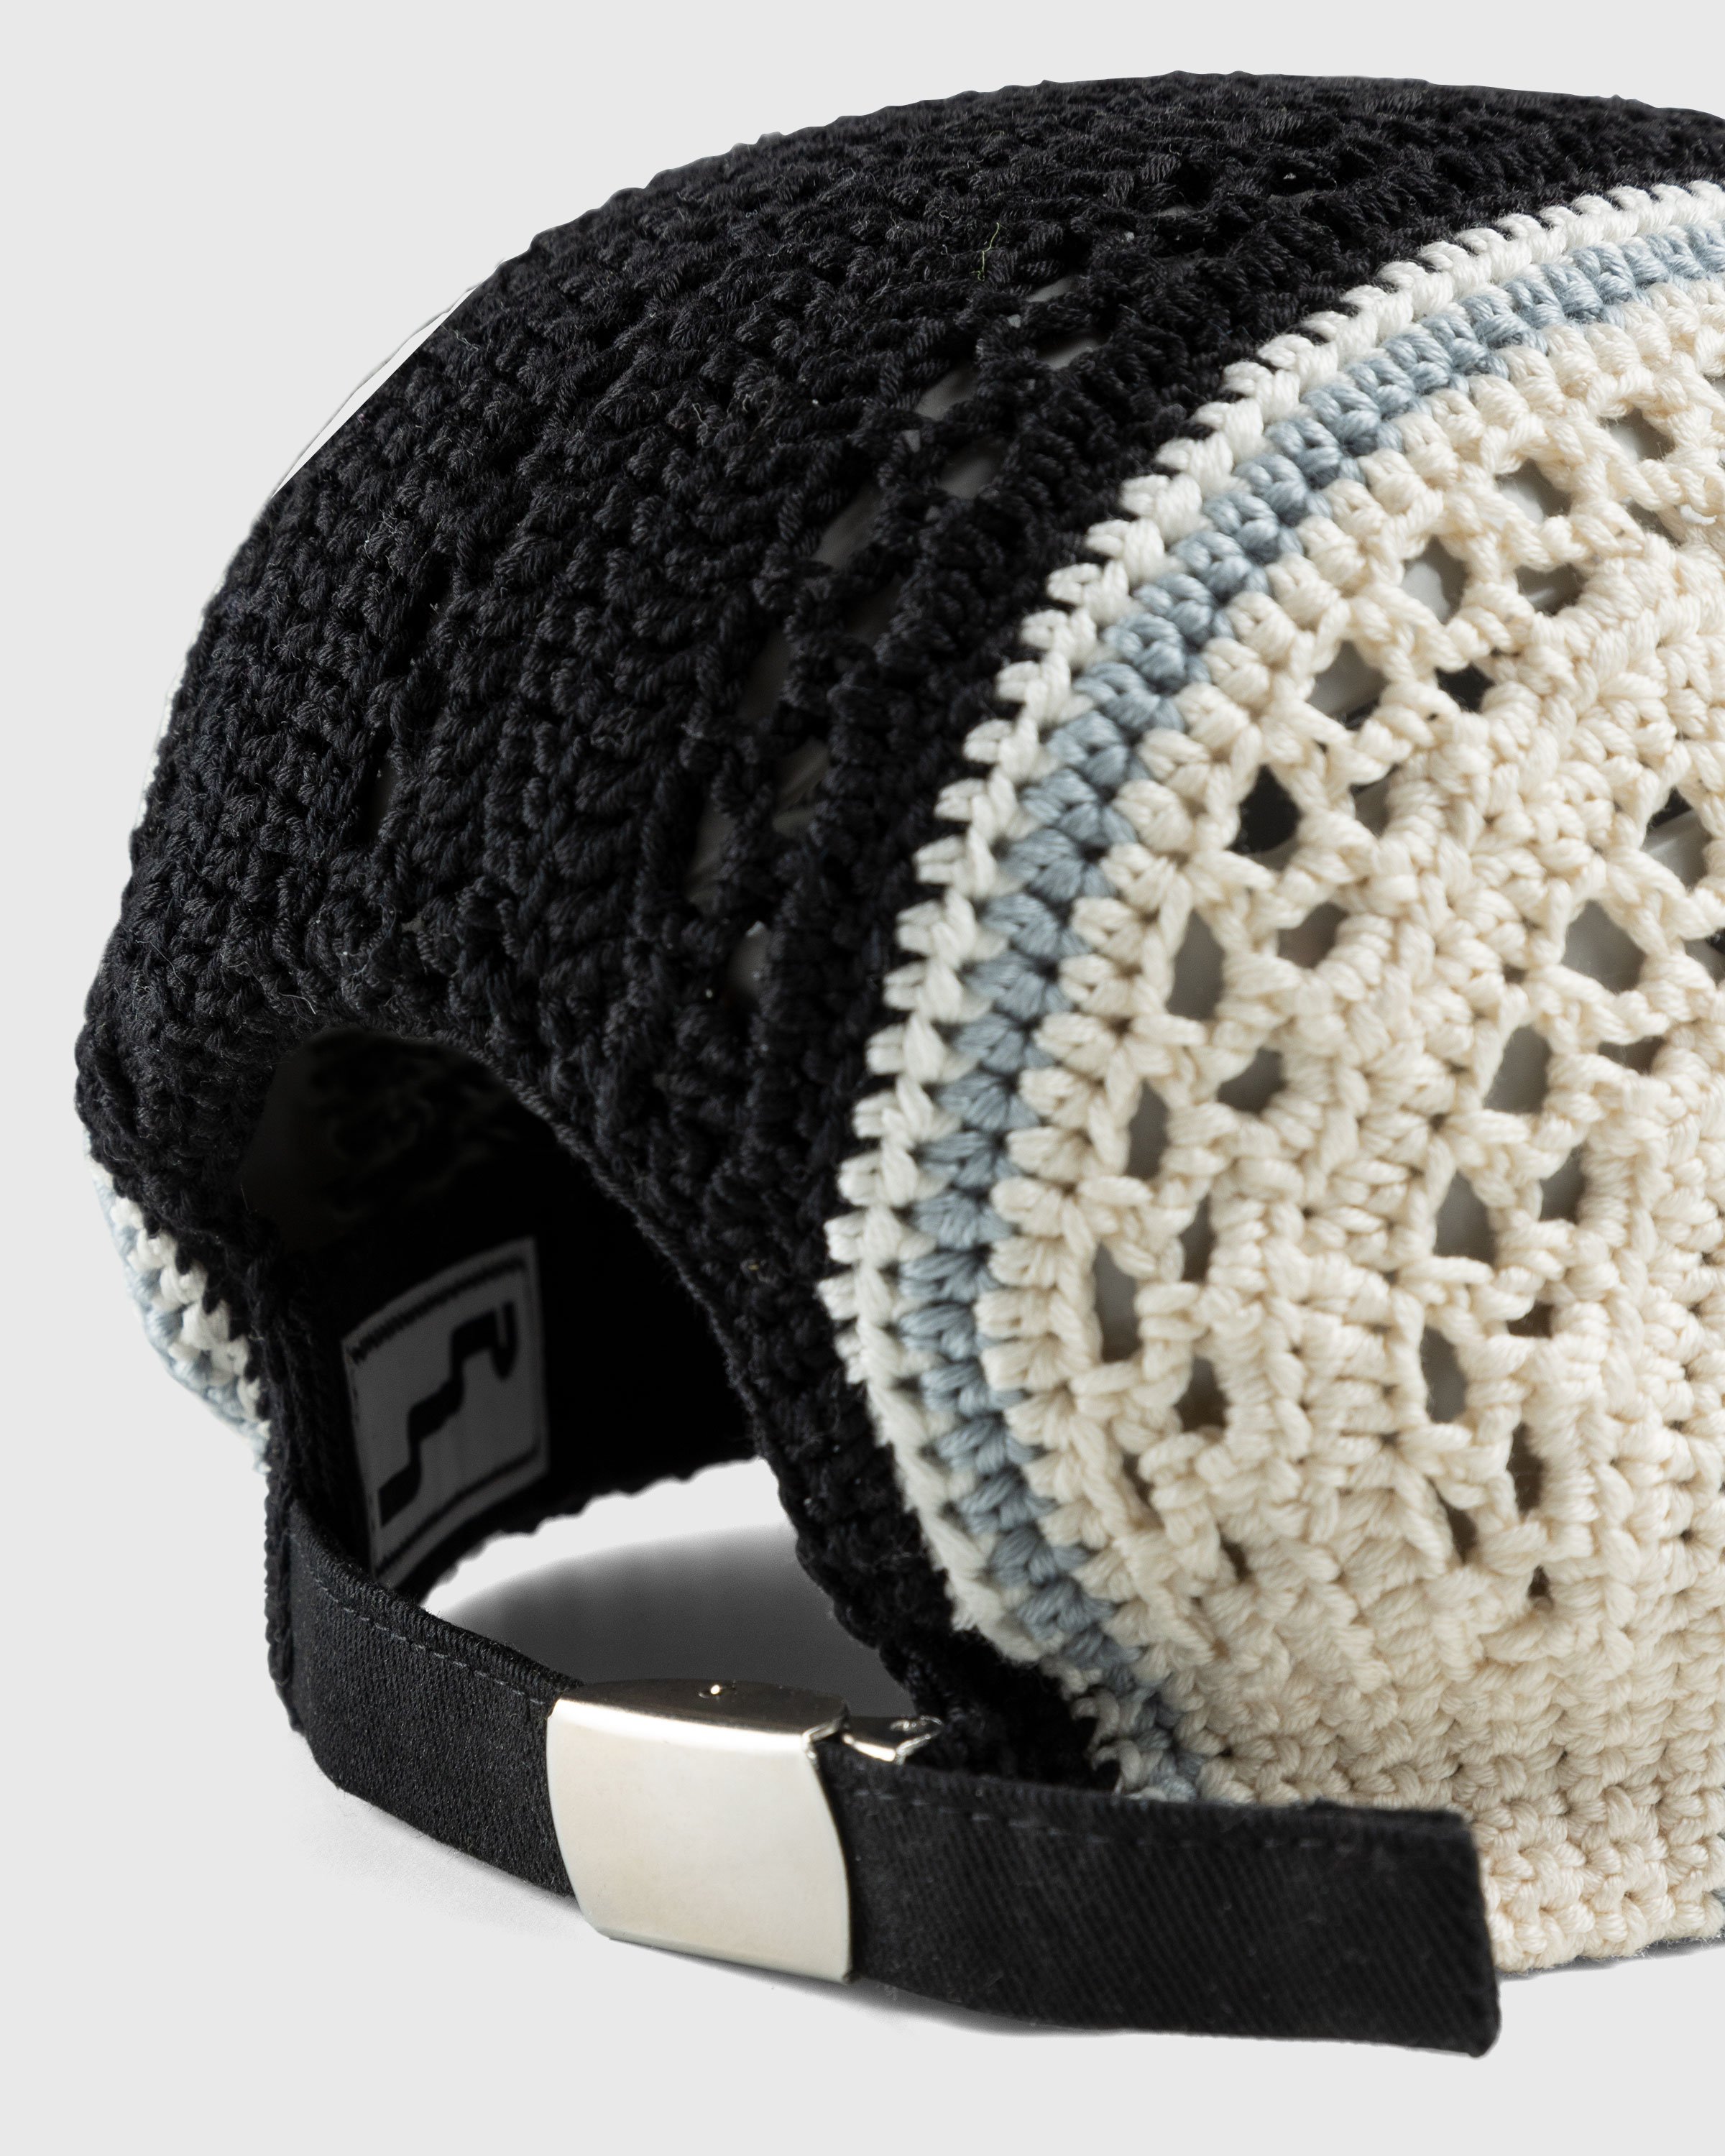 SSU - Crochet Baseball Cap Midnight Drive Black - Accessories - Black - Image 5